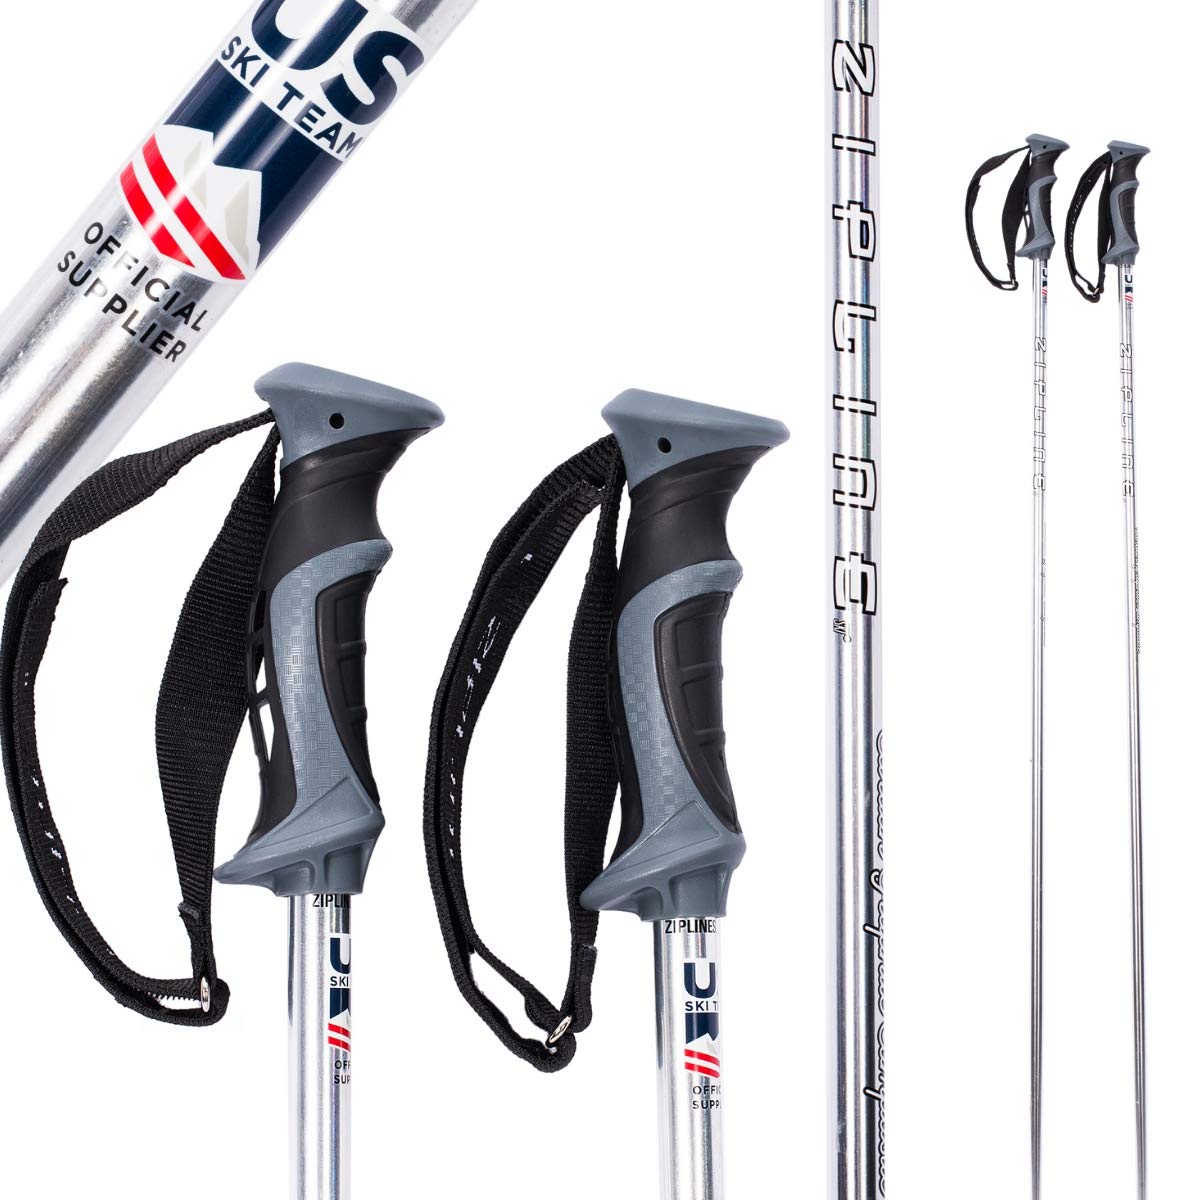 Zipline Ski Ski Poles Graphite Carbon Composite - Zipline Blurr 160 - Us Ski Team Official Supplier (Silver Chrome, 46 In117 Cm)